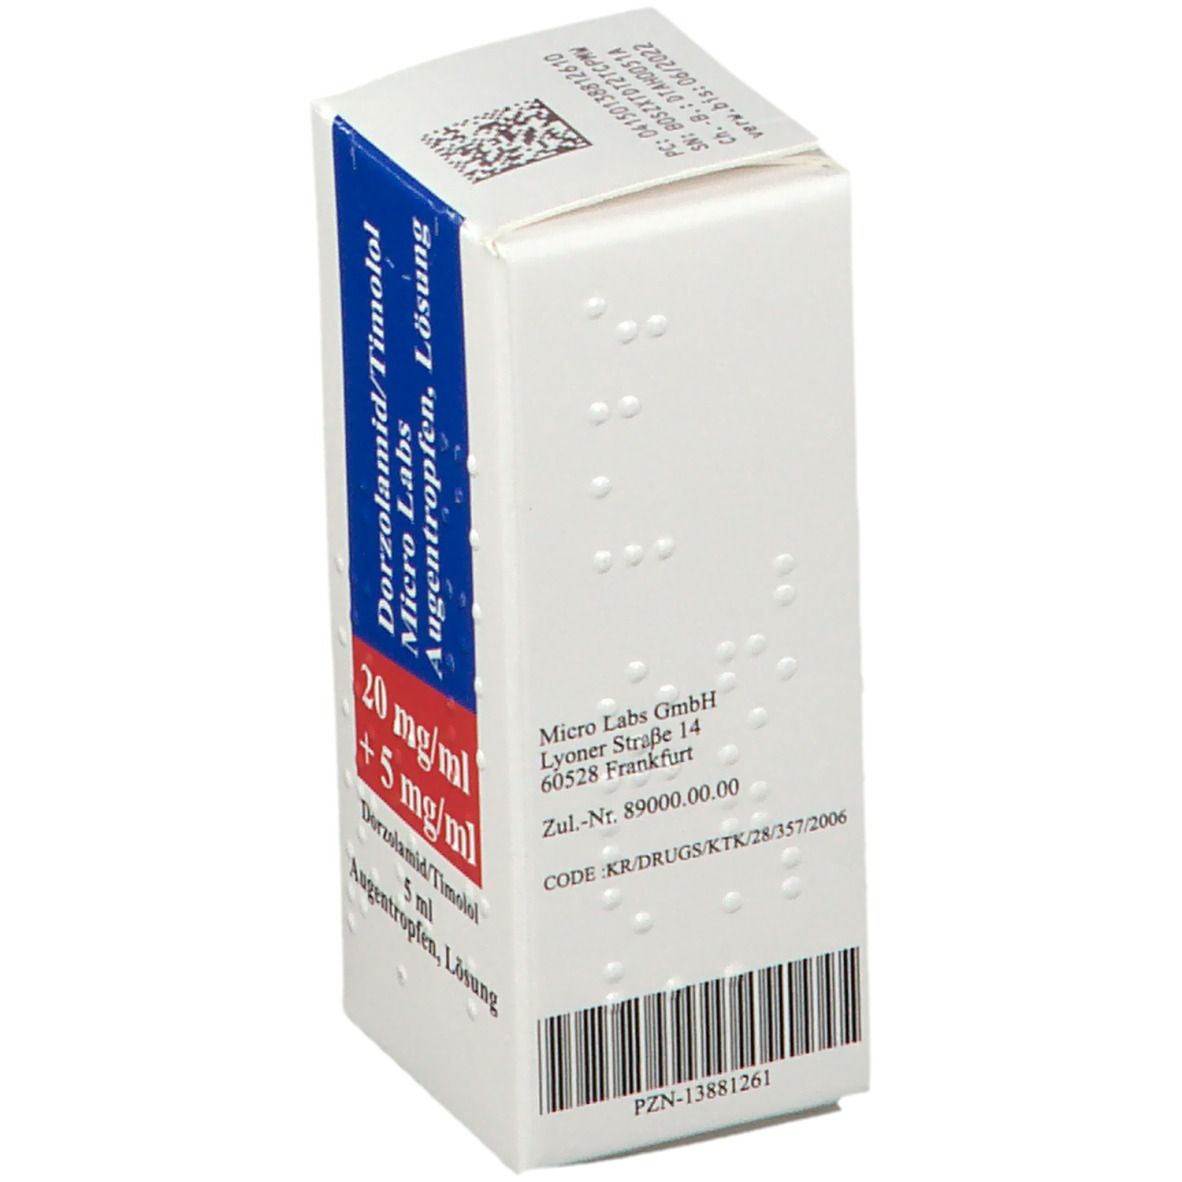 Dorzolamid/Timolol Micro Labs 20 mg/ml + 5 mg/ml